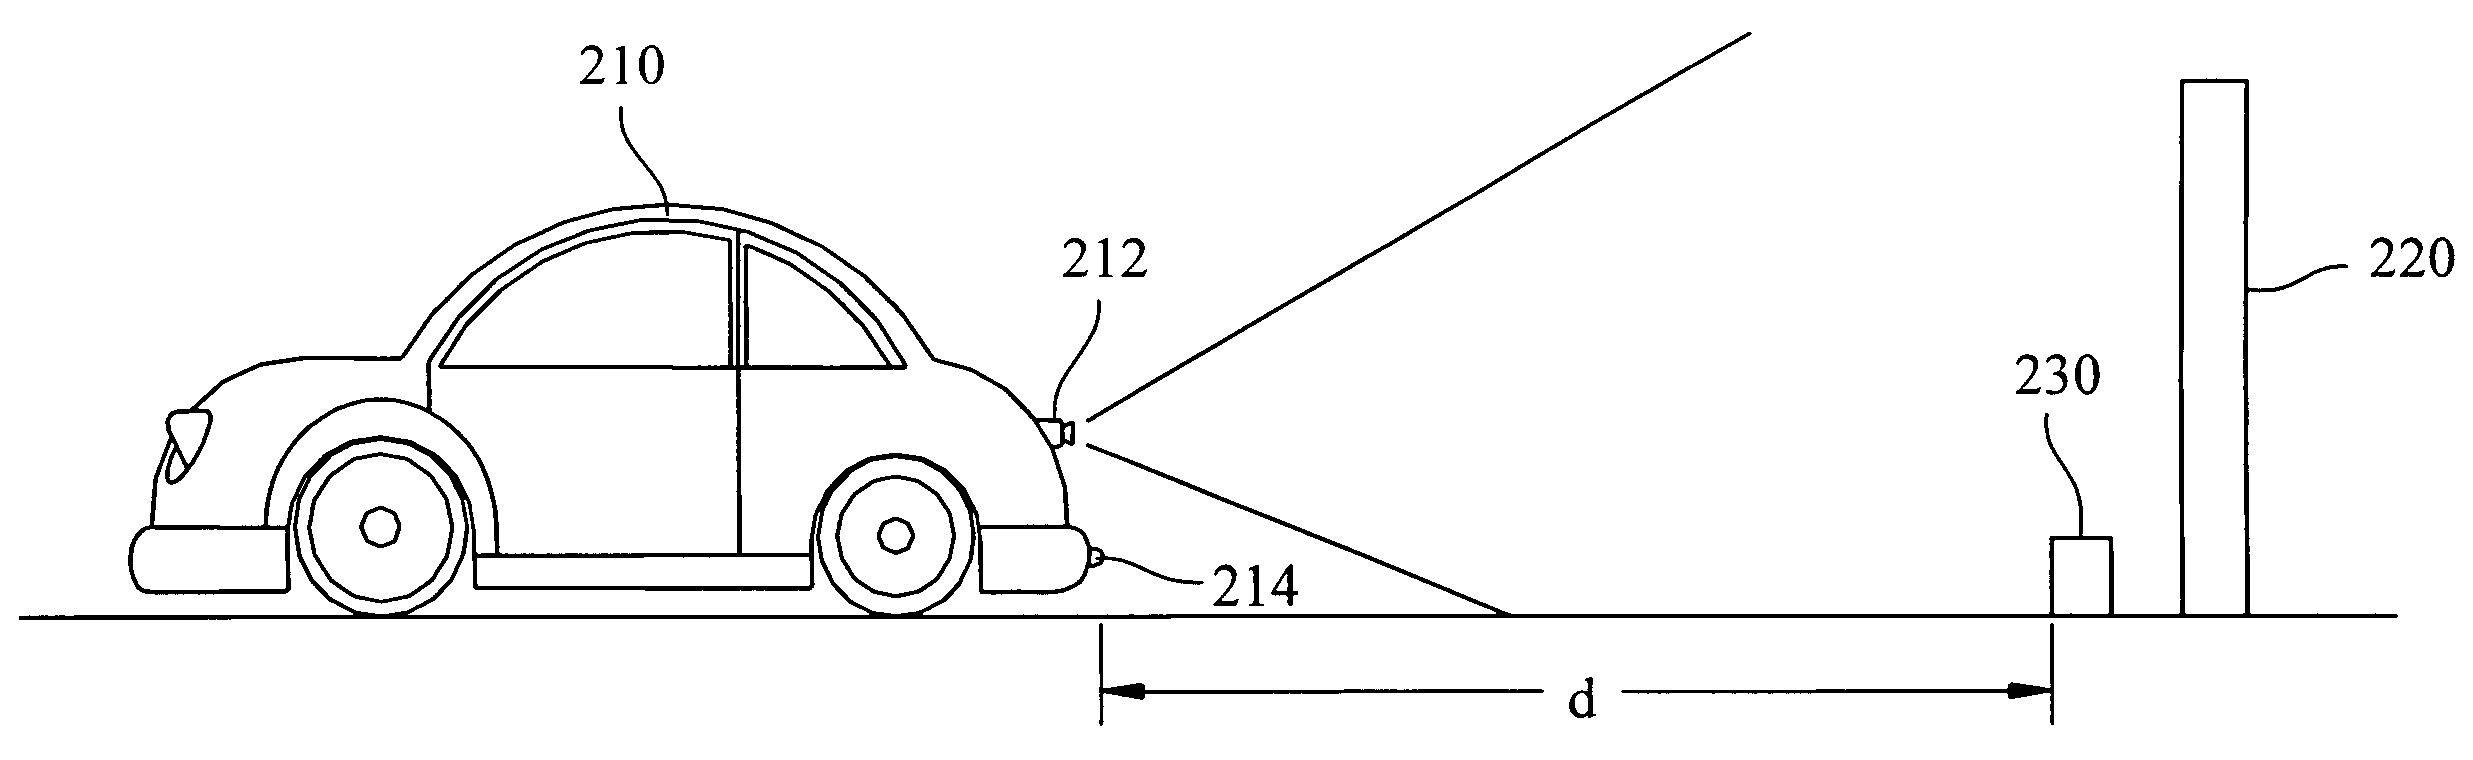 Method of displaying shot image on car reverse video system